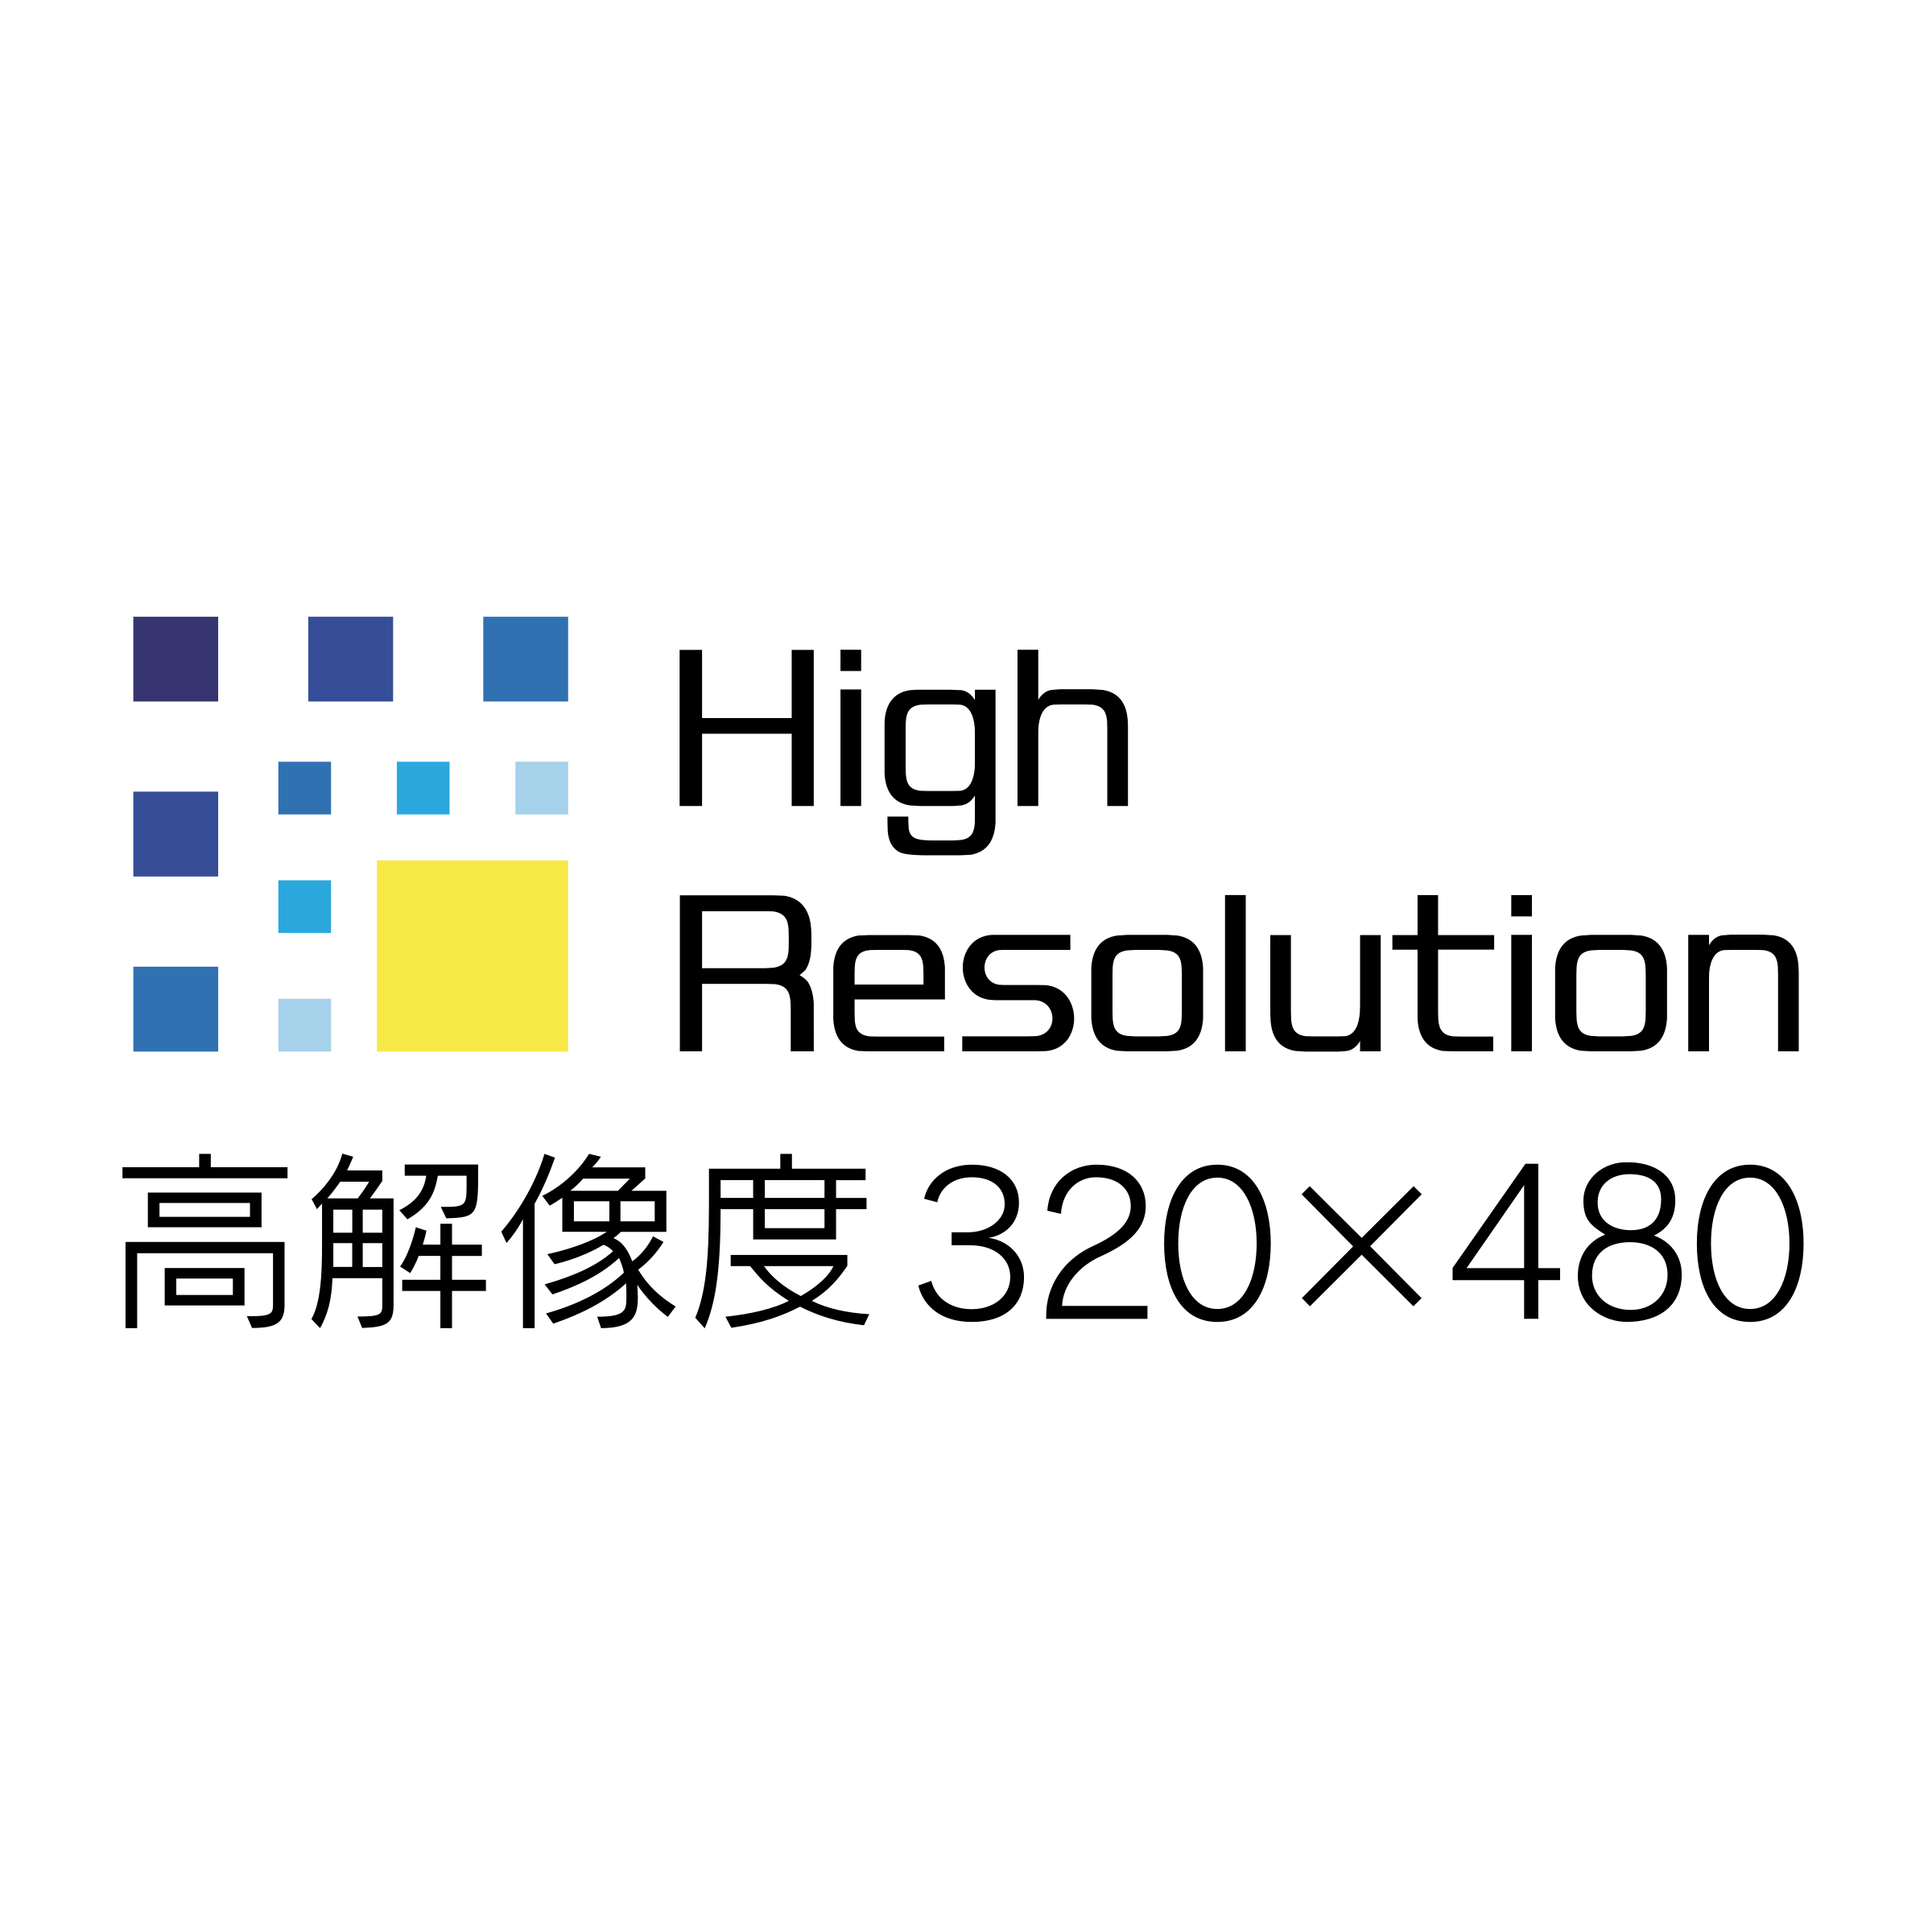 Resolution Logo - Sony Clie High Resolution Logo PNG Transparent & SVG Vector ...